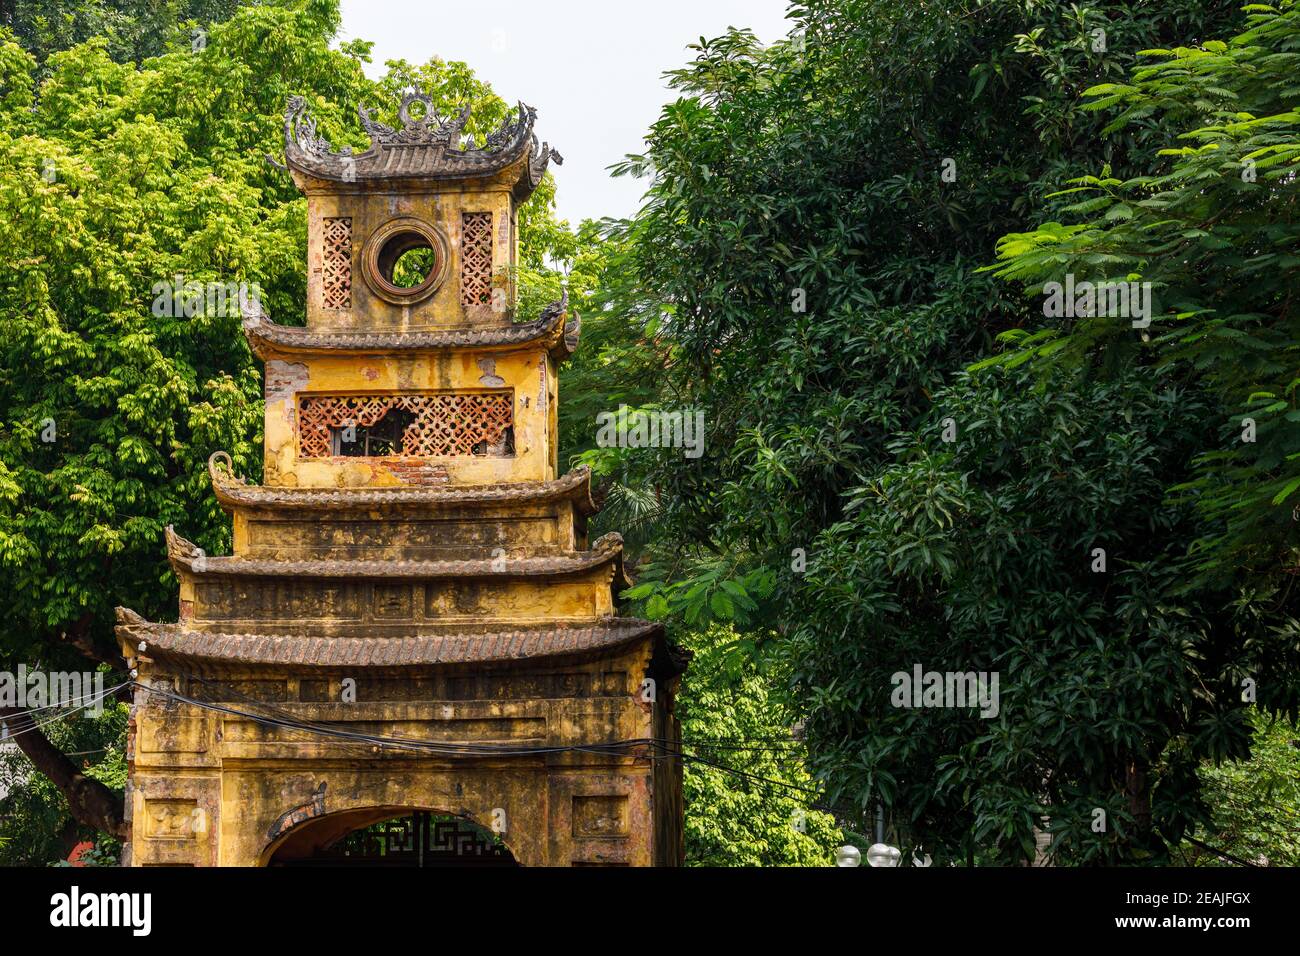 The citadel of Hanoi in Vietnam Stock Photo